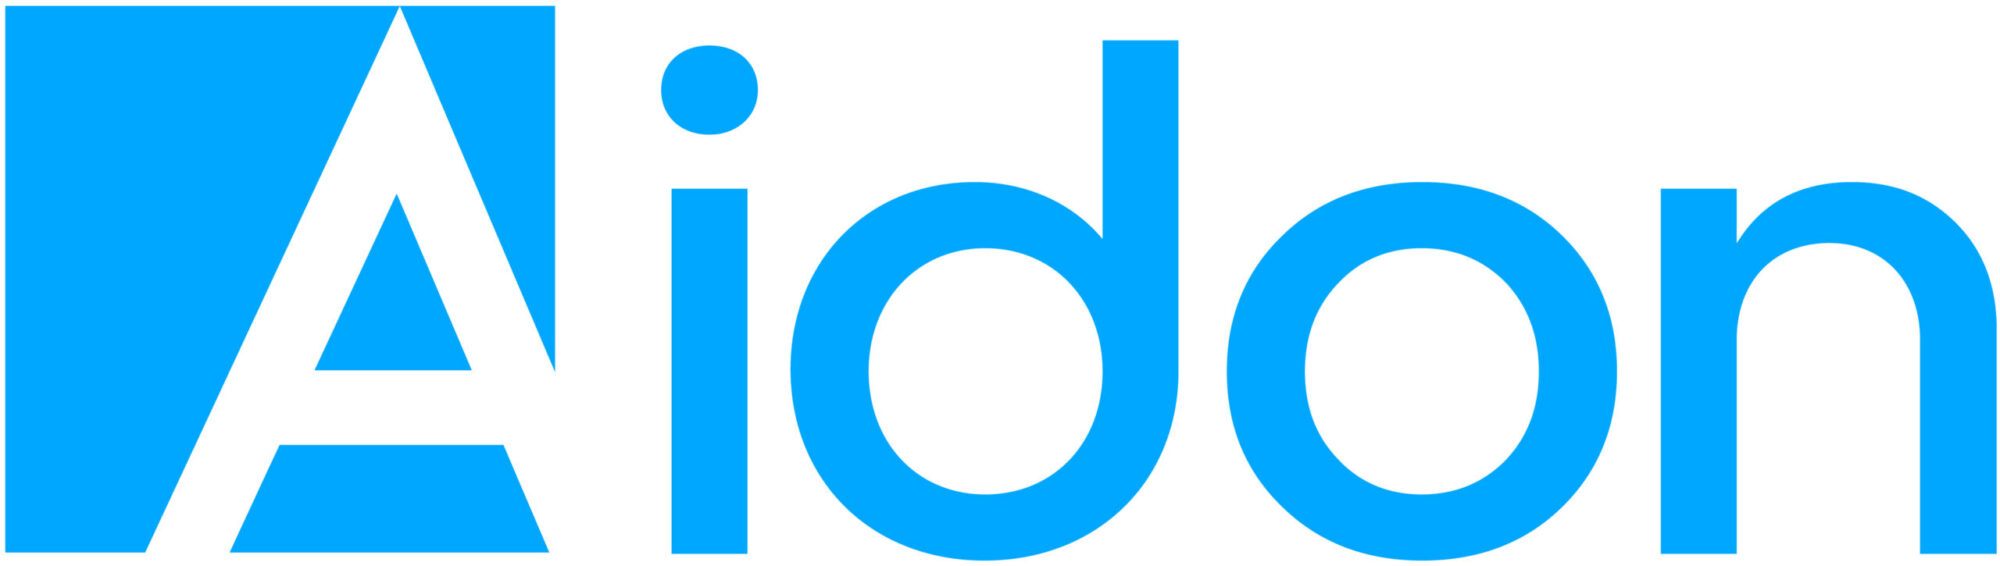 Aidon light blue logo.